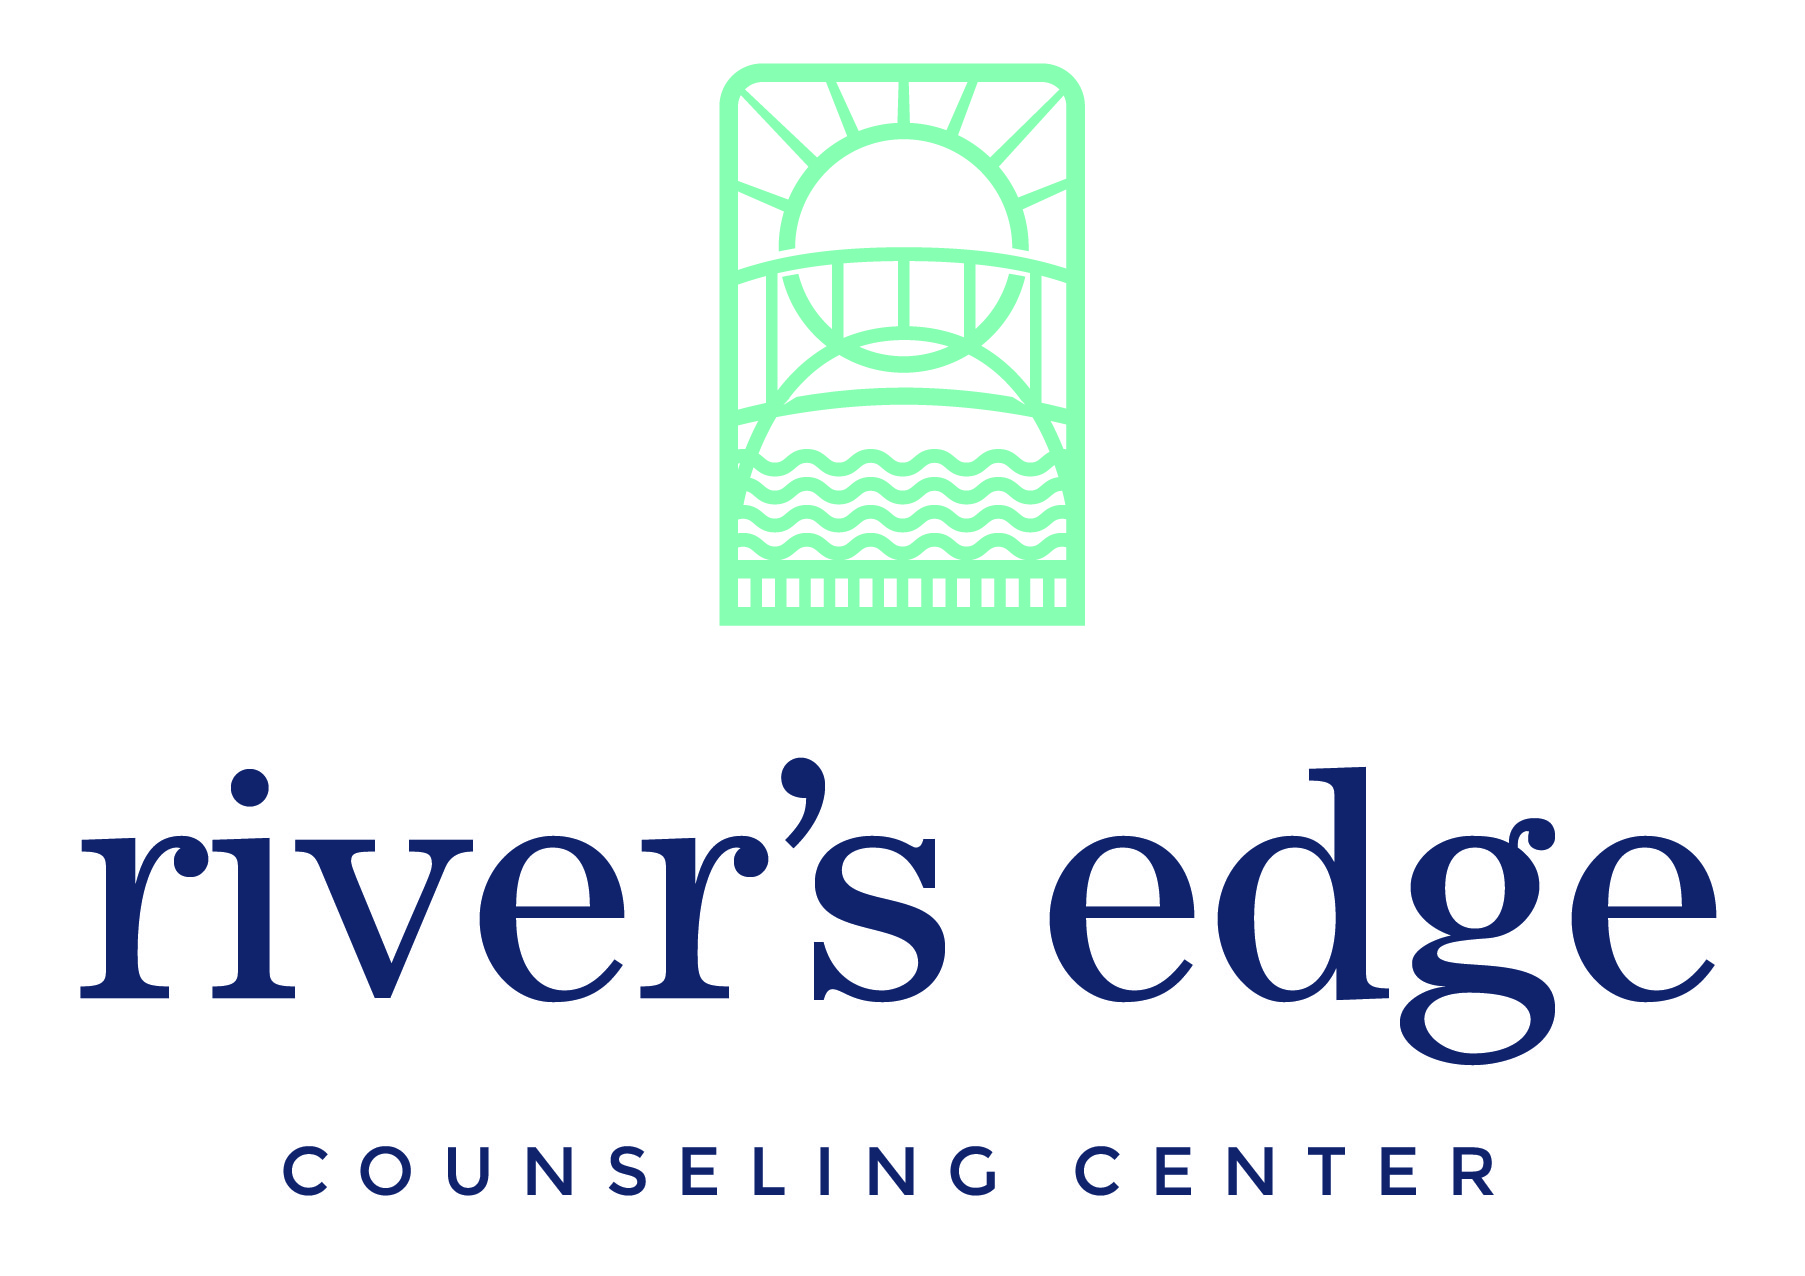 Rivers edge counseling logo